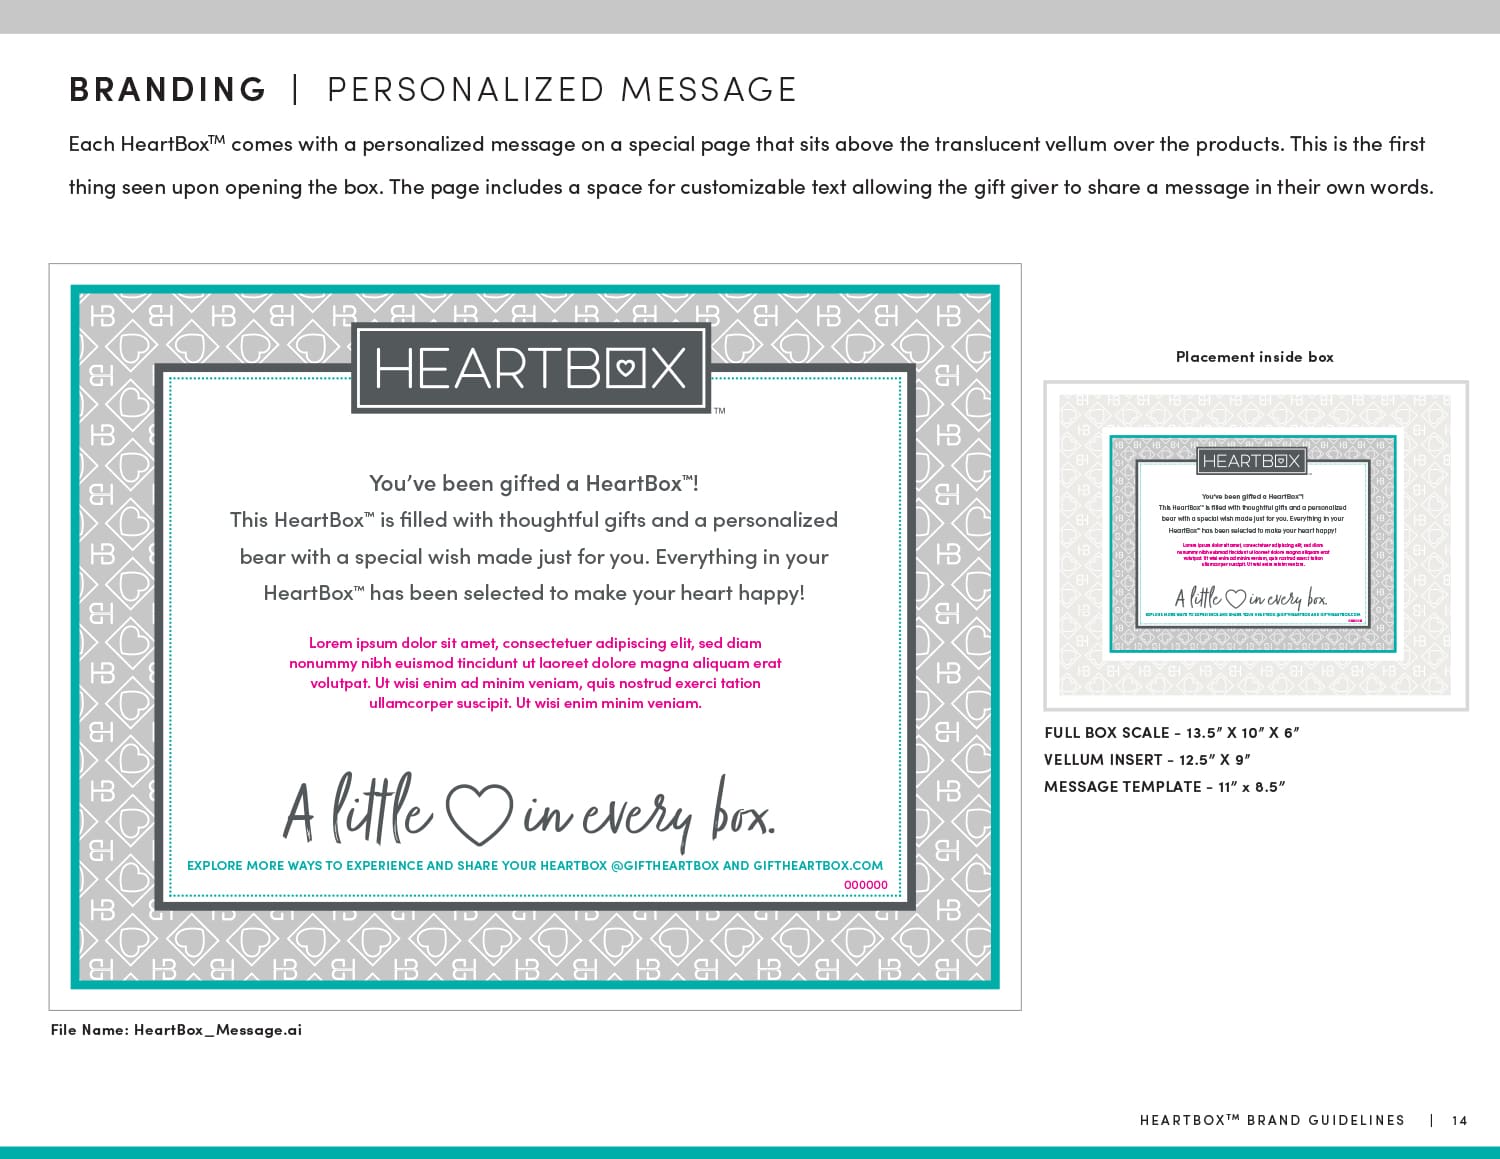 HeartBox Marketing Design Personalized Message